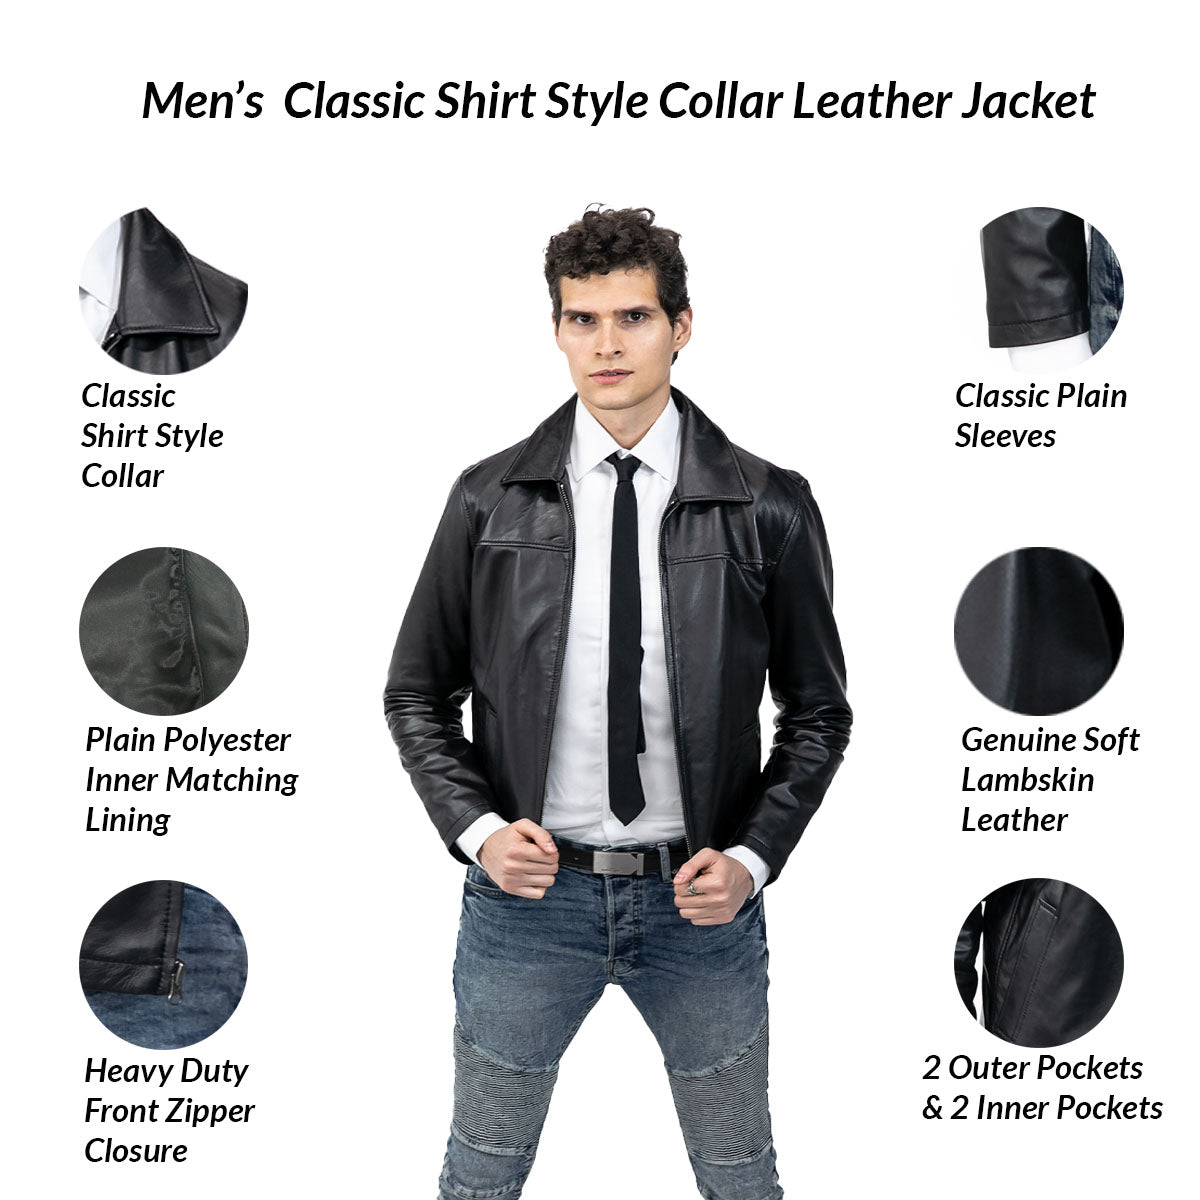 Classic Collar Black Leather Shirt Jackets